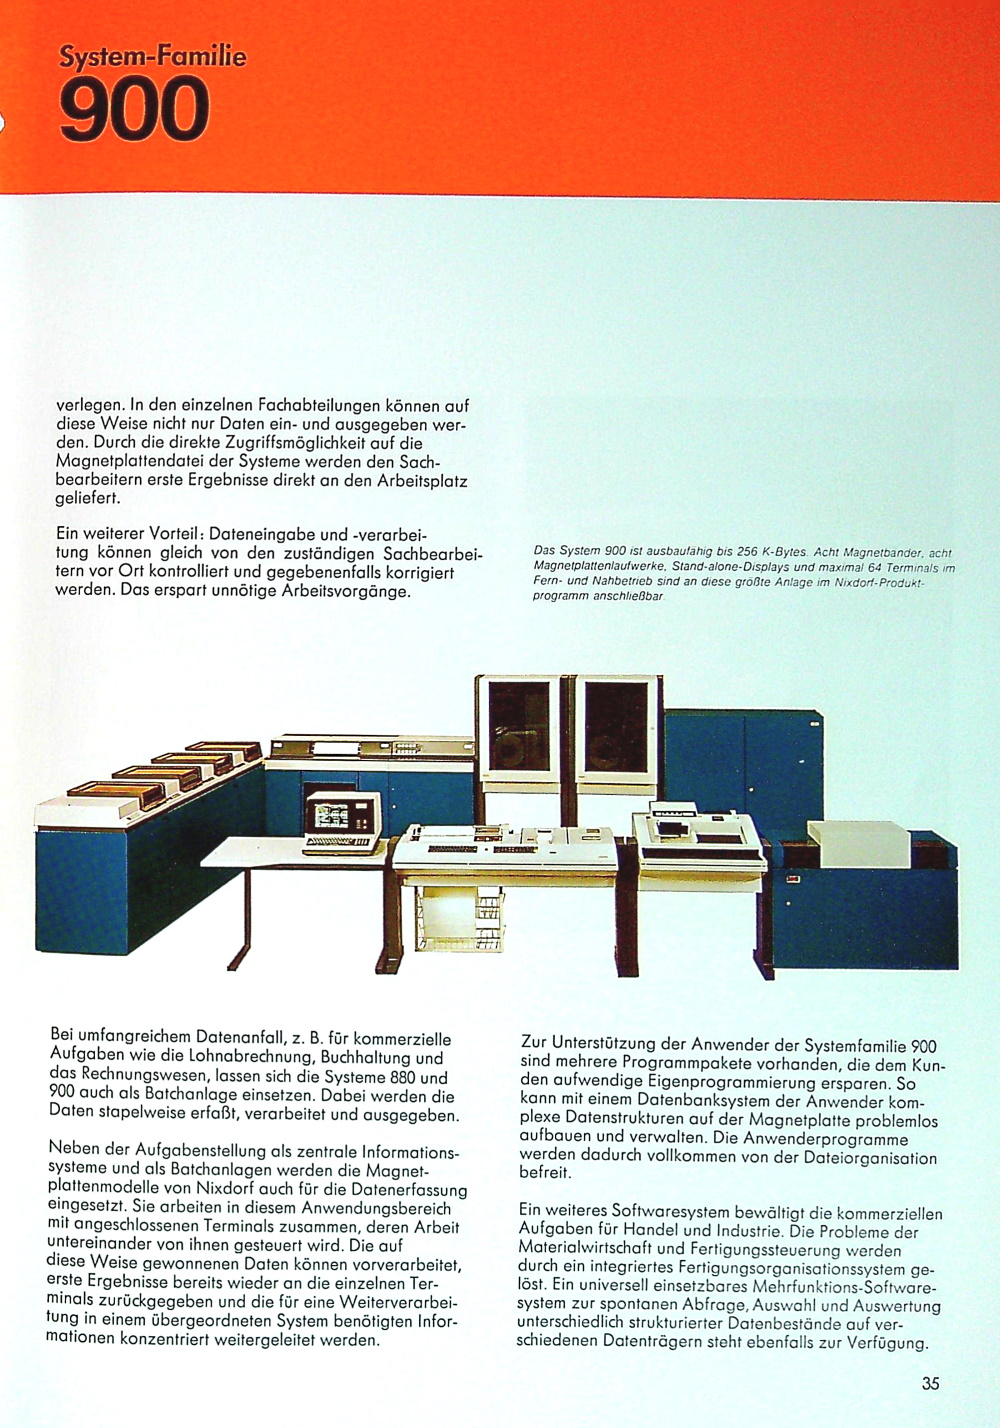 Nixdorf Produkte 1974